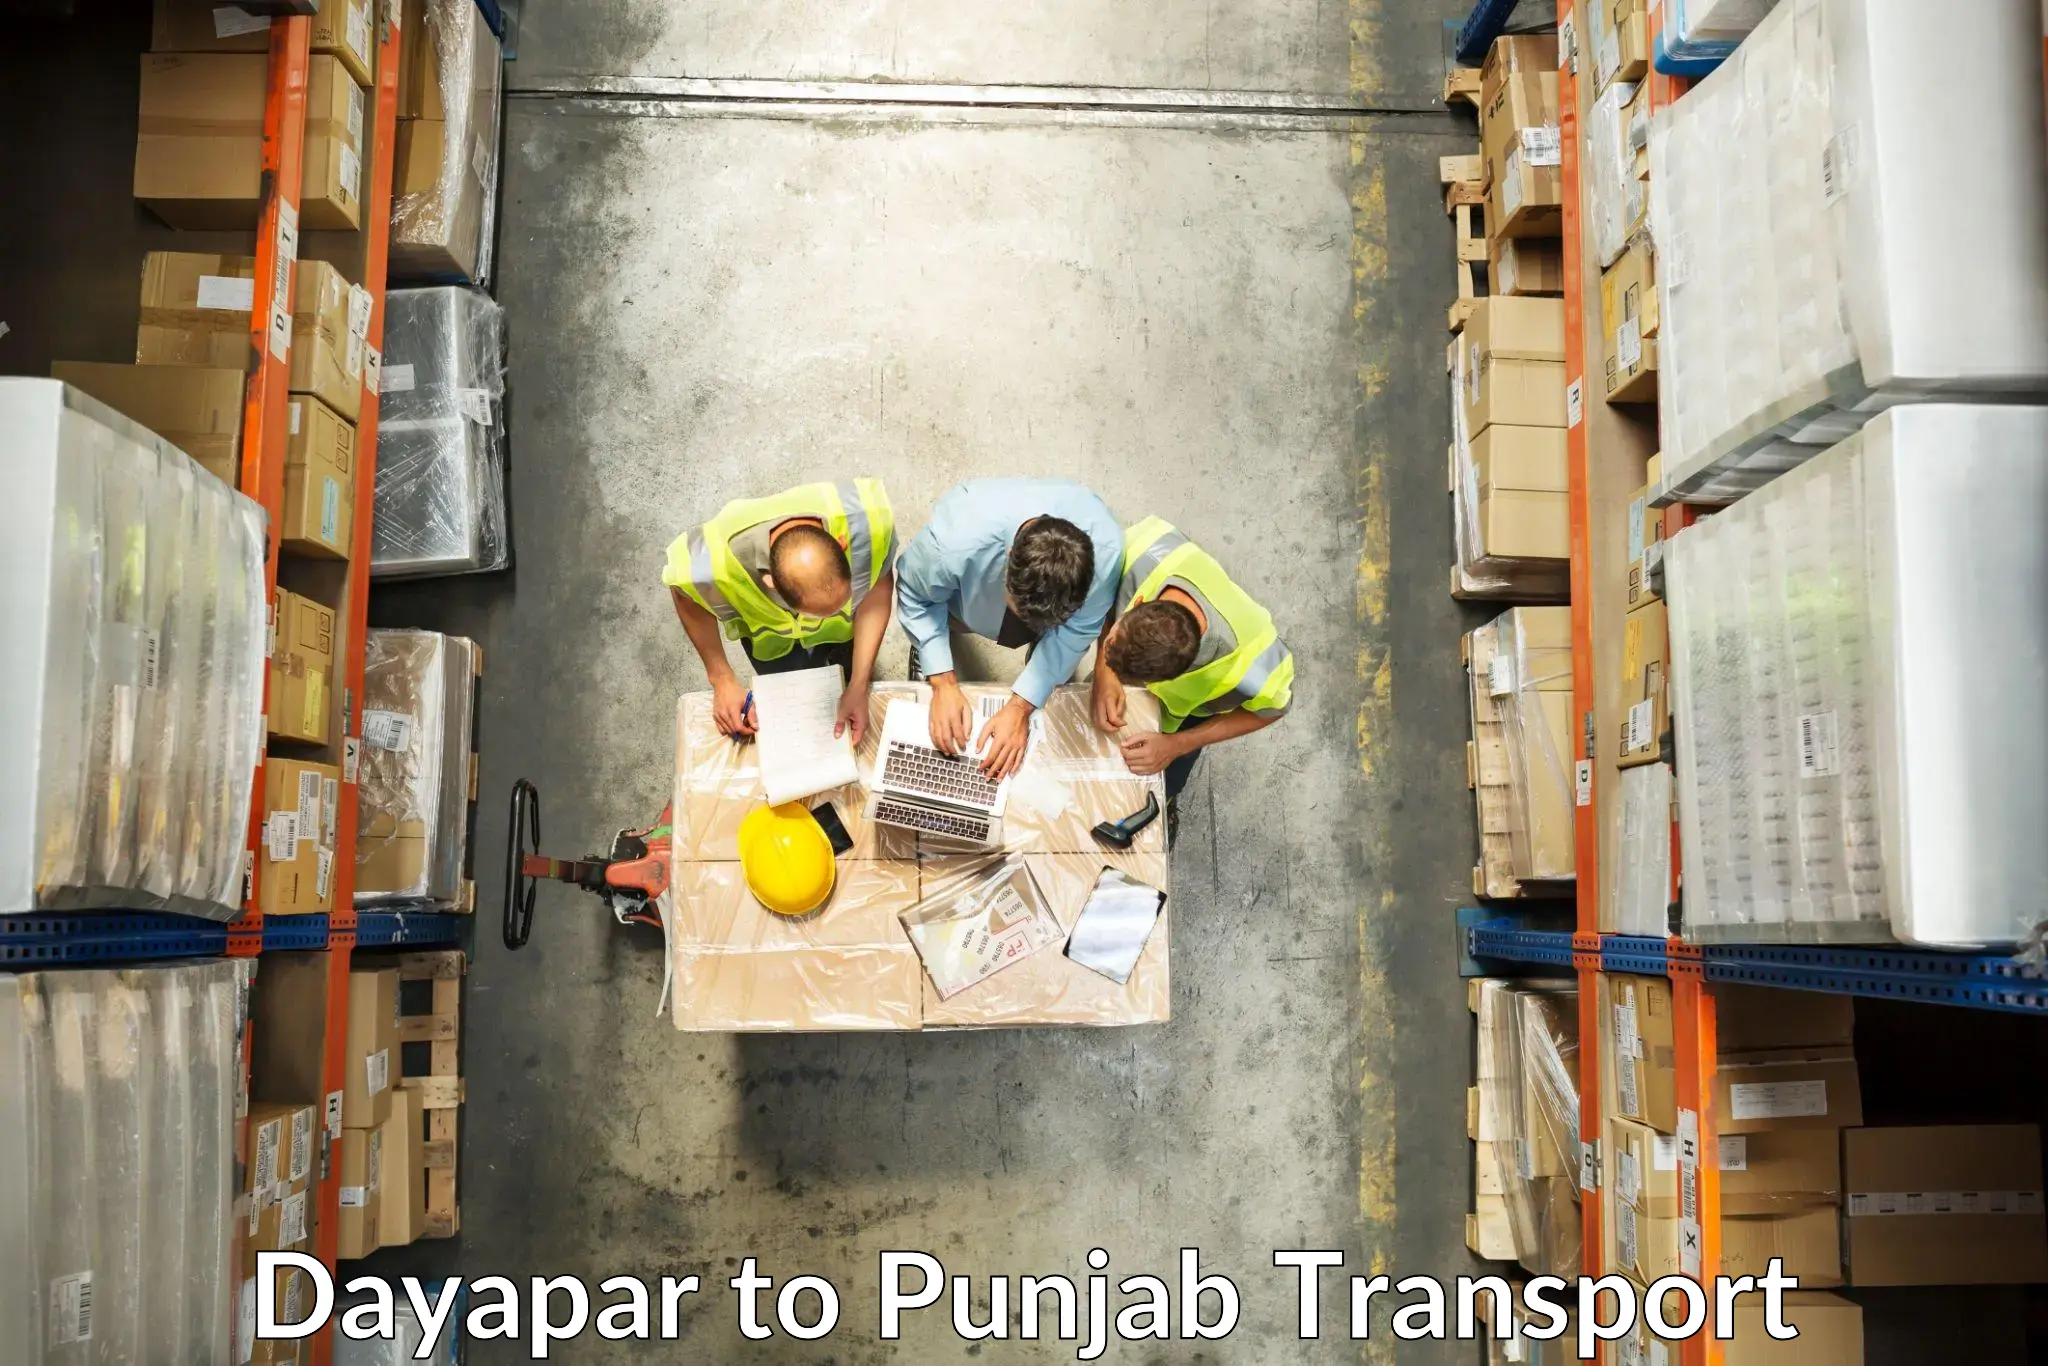 Container transport service Dayapar to Punjab